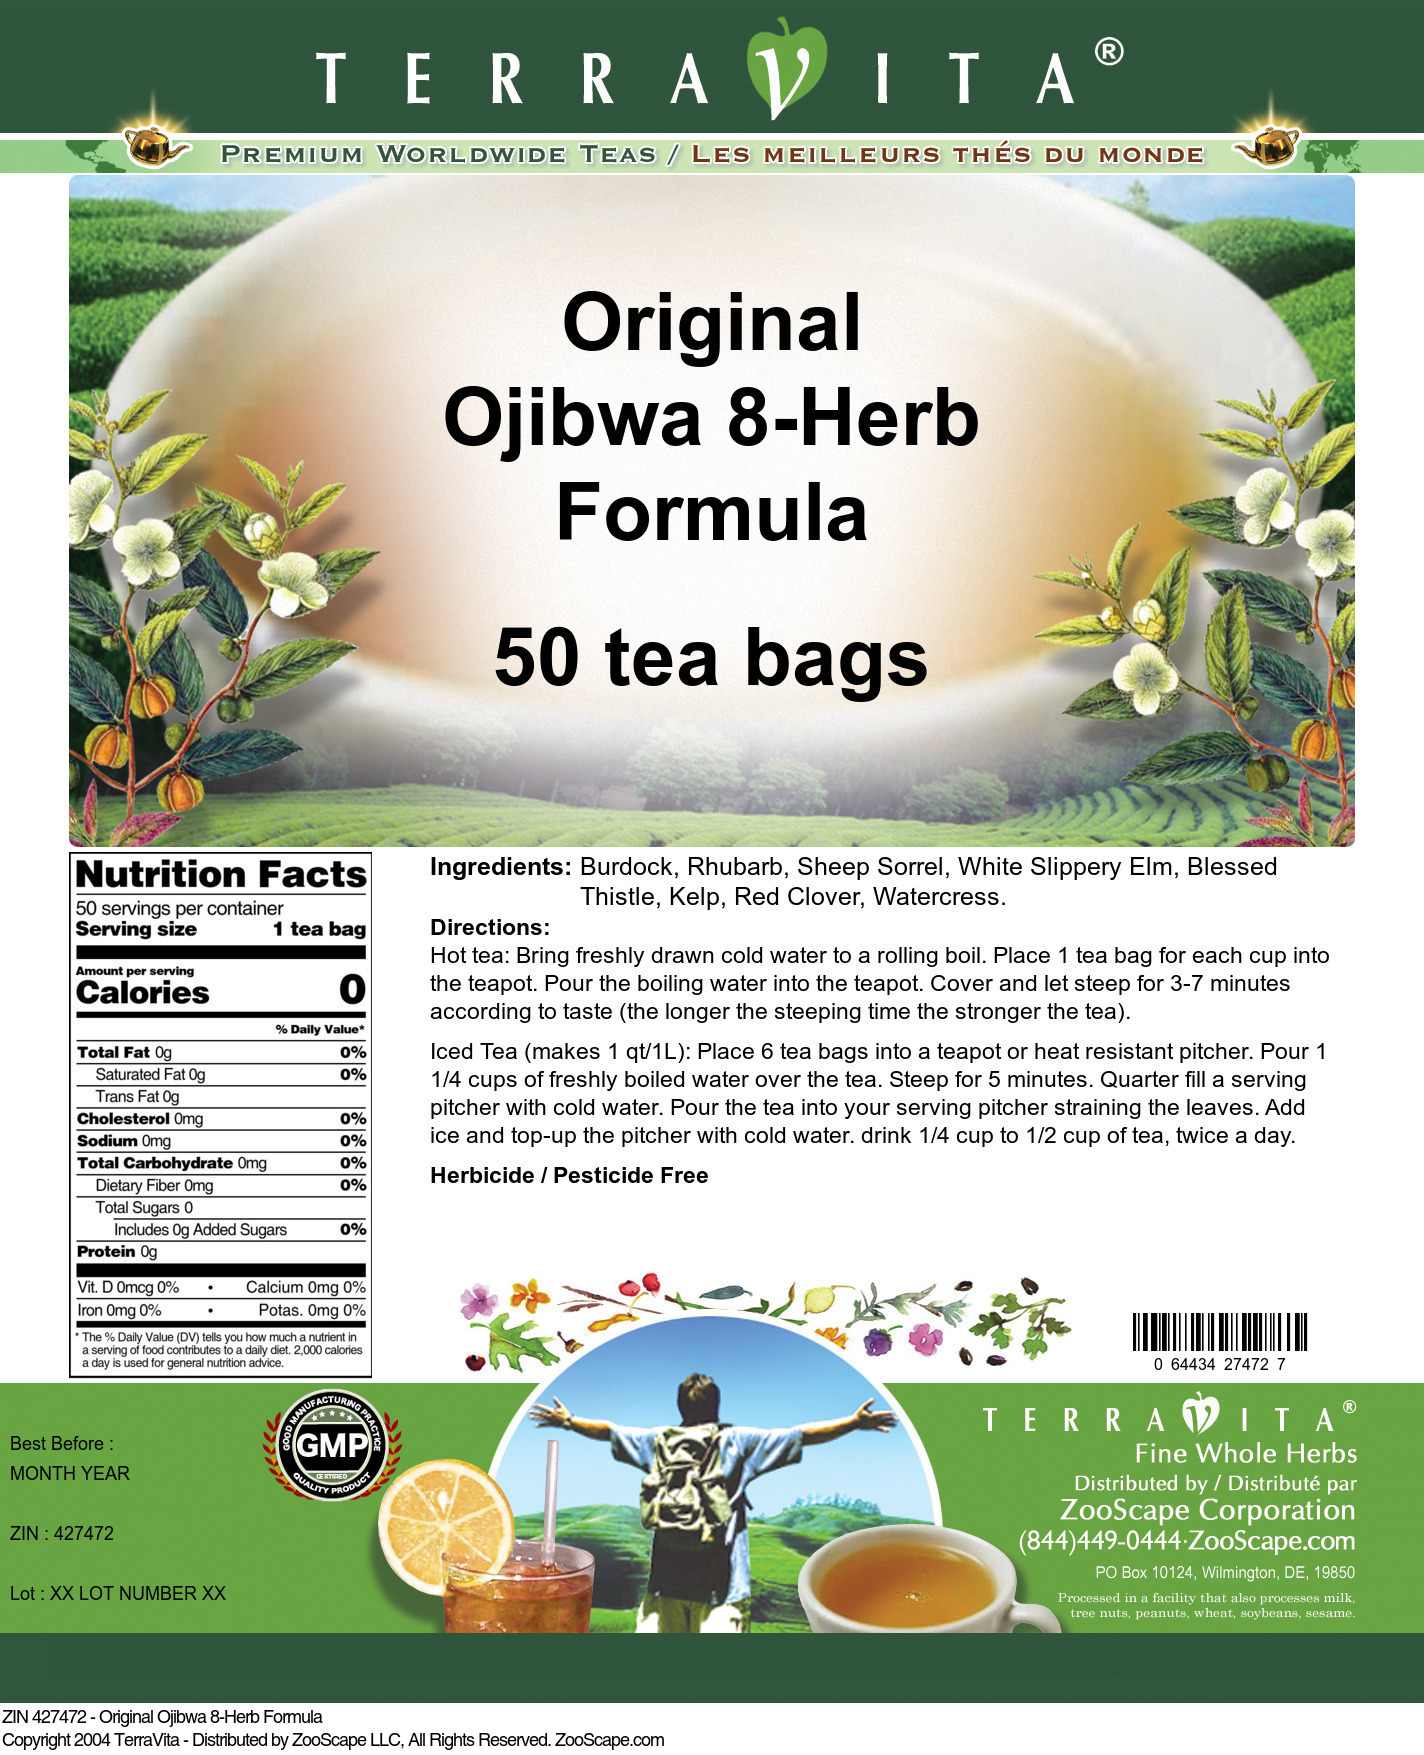 Original Ojibwa 8-Herb Formula - Label